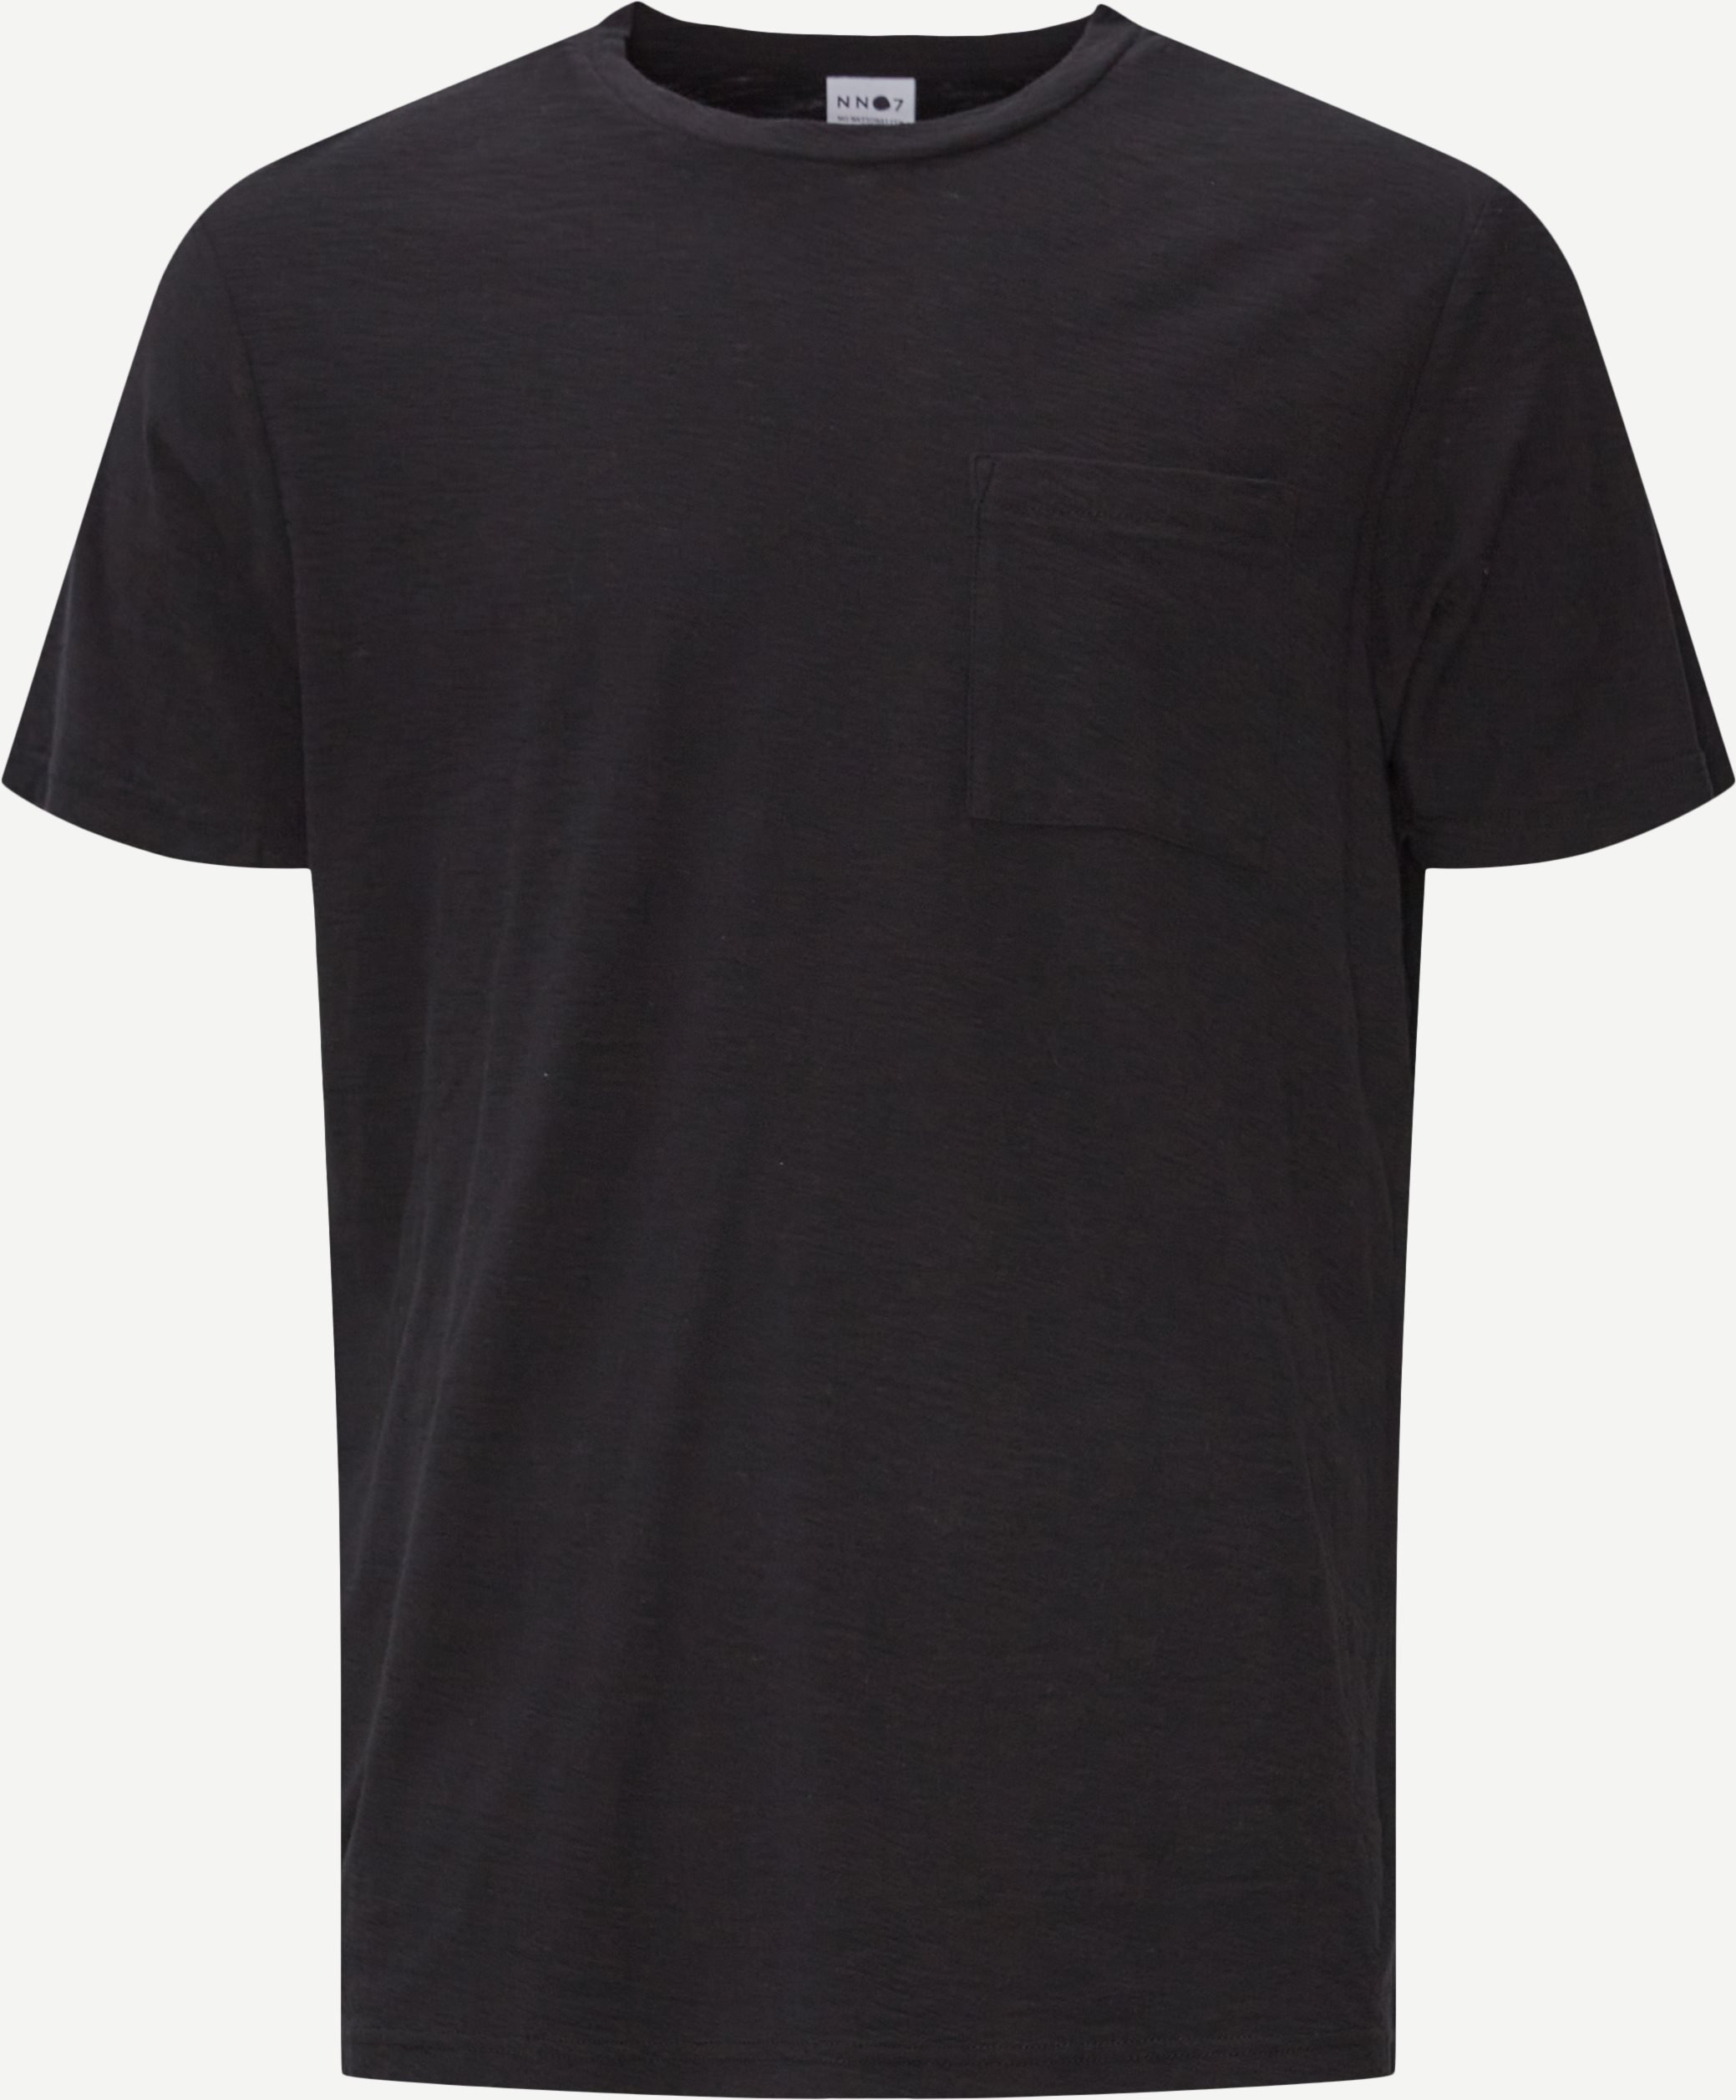 3420 Aspen T-shirt - T-shirts - Regular fit - Sort